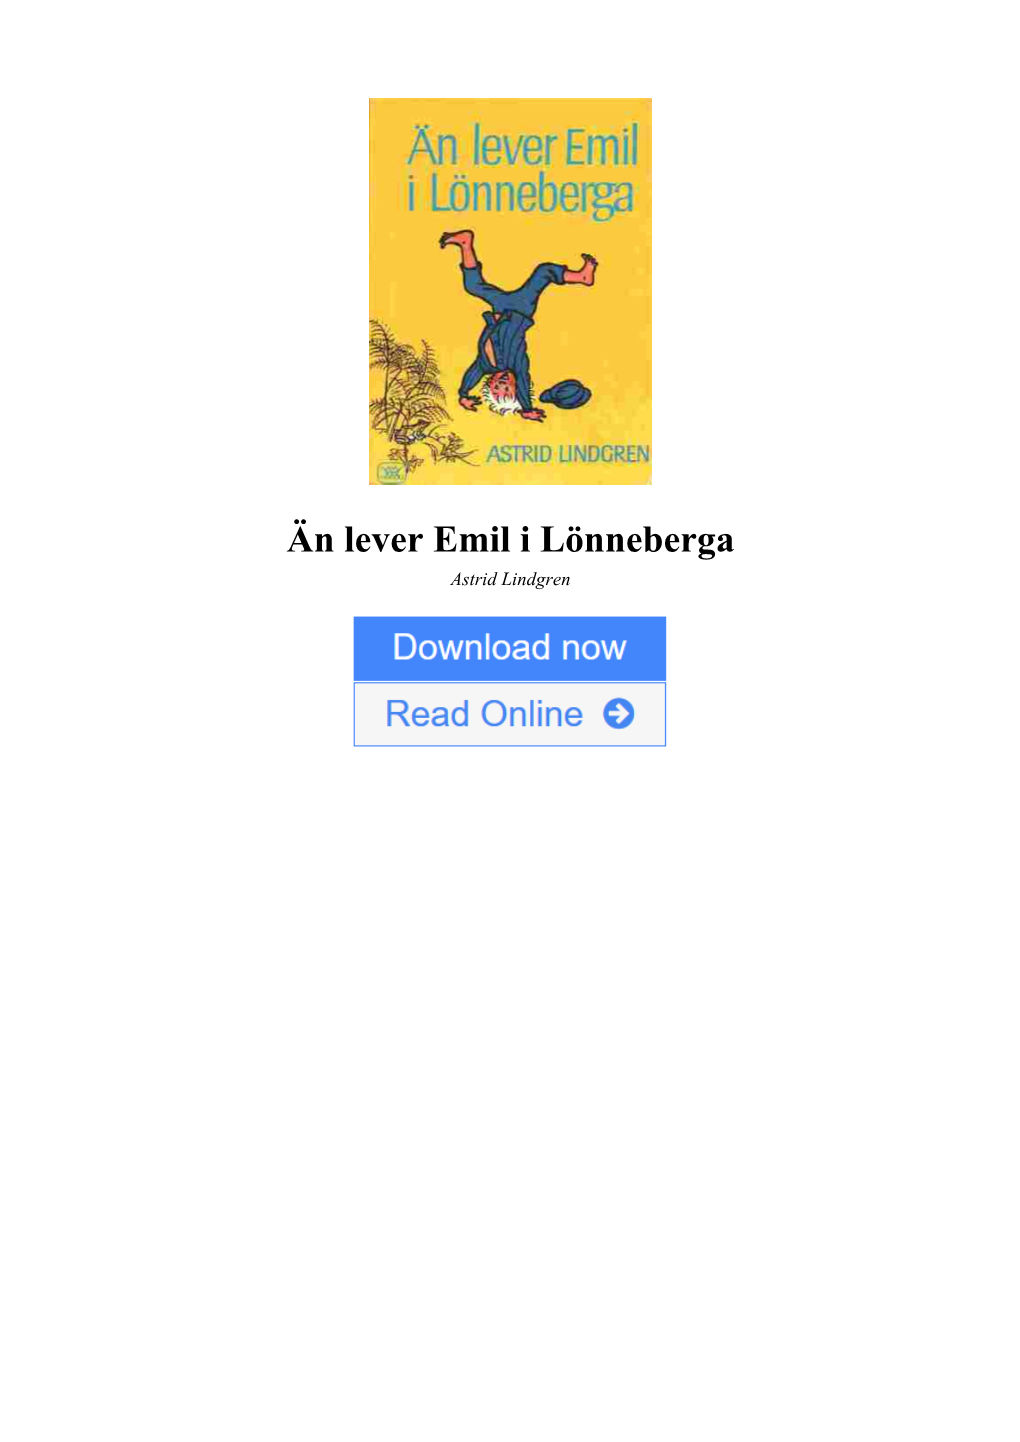 Än Lever Emil I Lönneberga by Astrid Lindgren